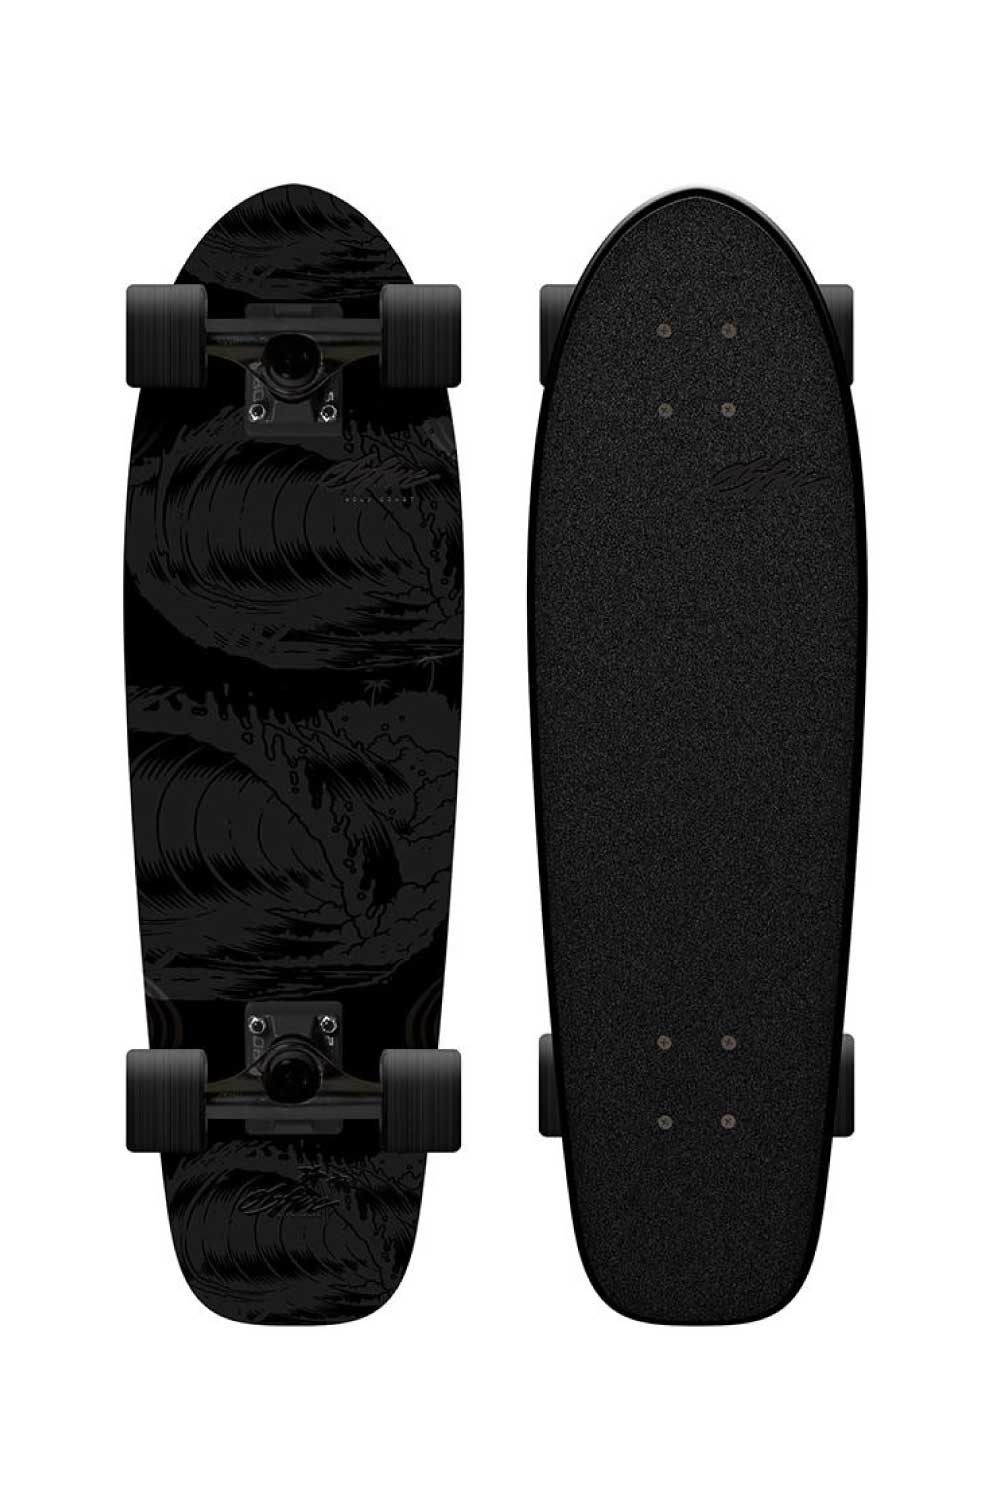 Obfive Blacker Cruiser 28" Skateboard